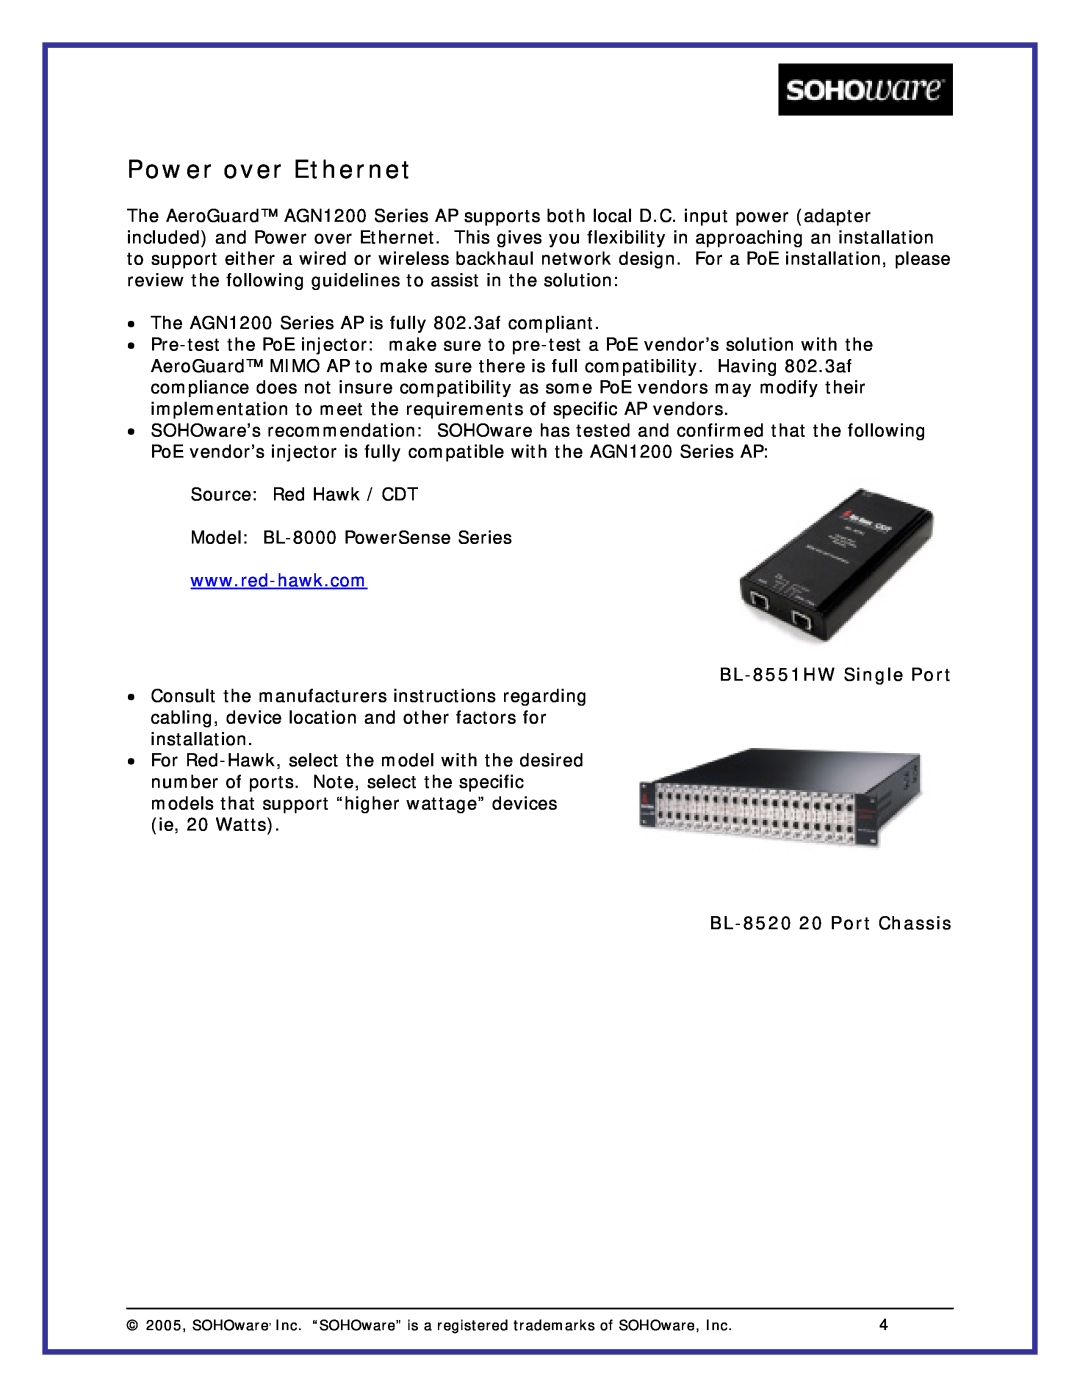 Soho AP manual Power over Ethernet, BL-8551HW Single Port, BL-8520 20 Port Chassis 